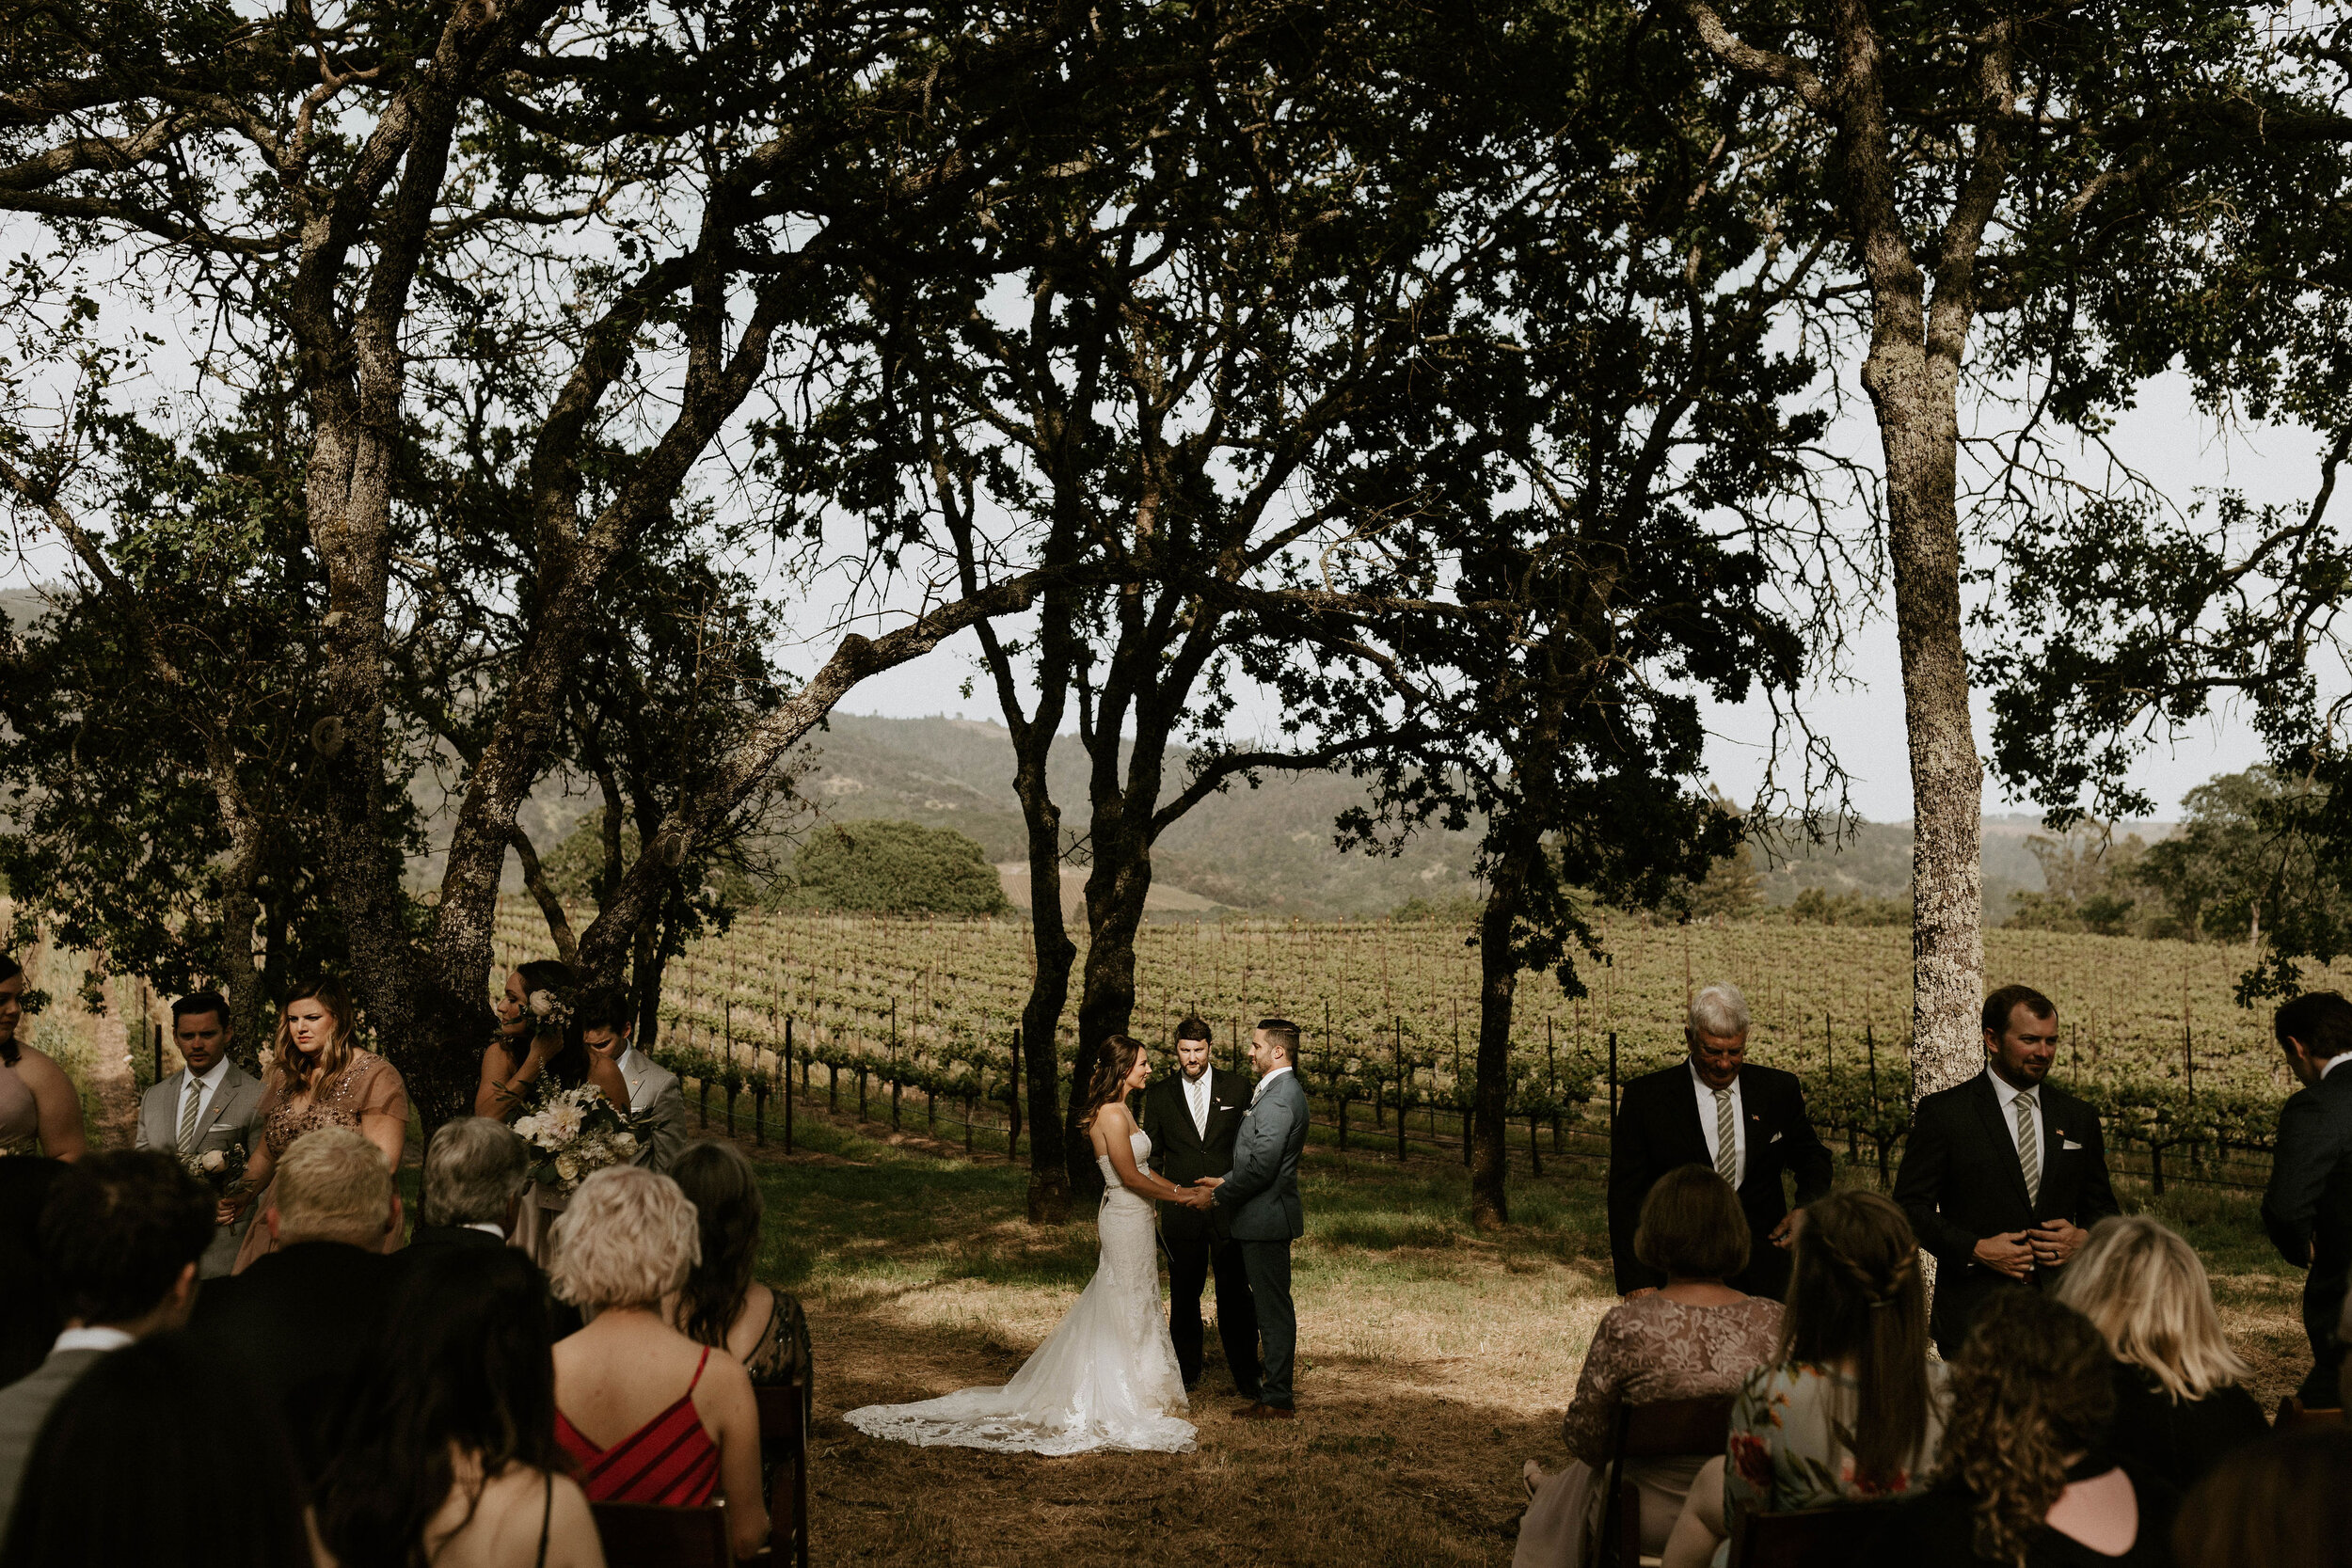 B.R. Cohn Winery Wedding Venue Ceremony Spot